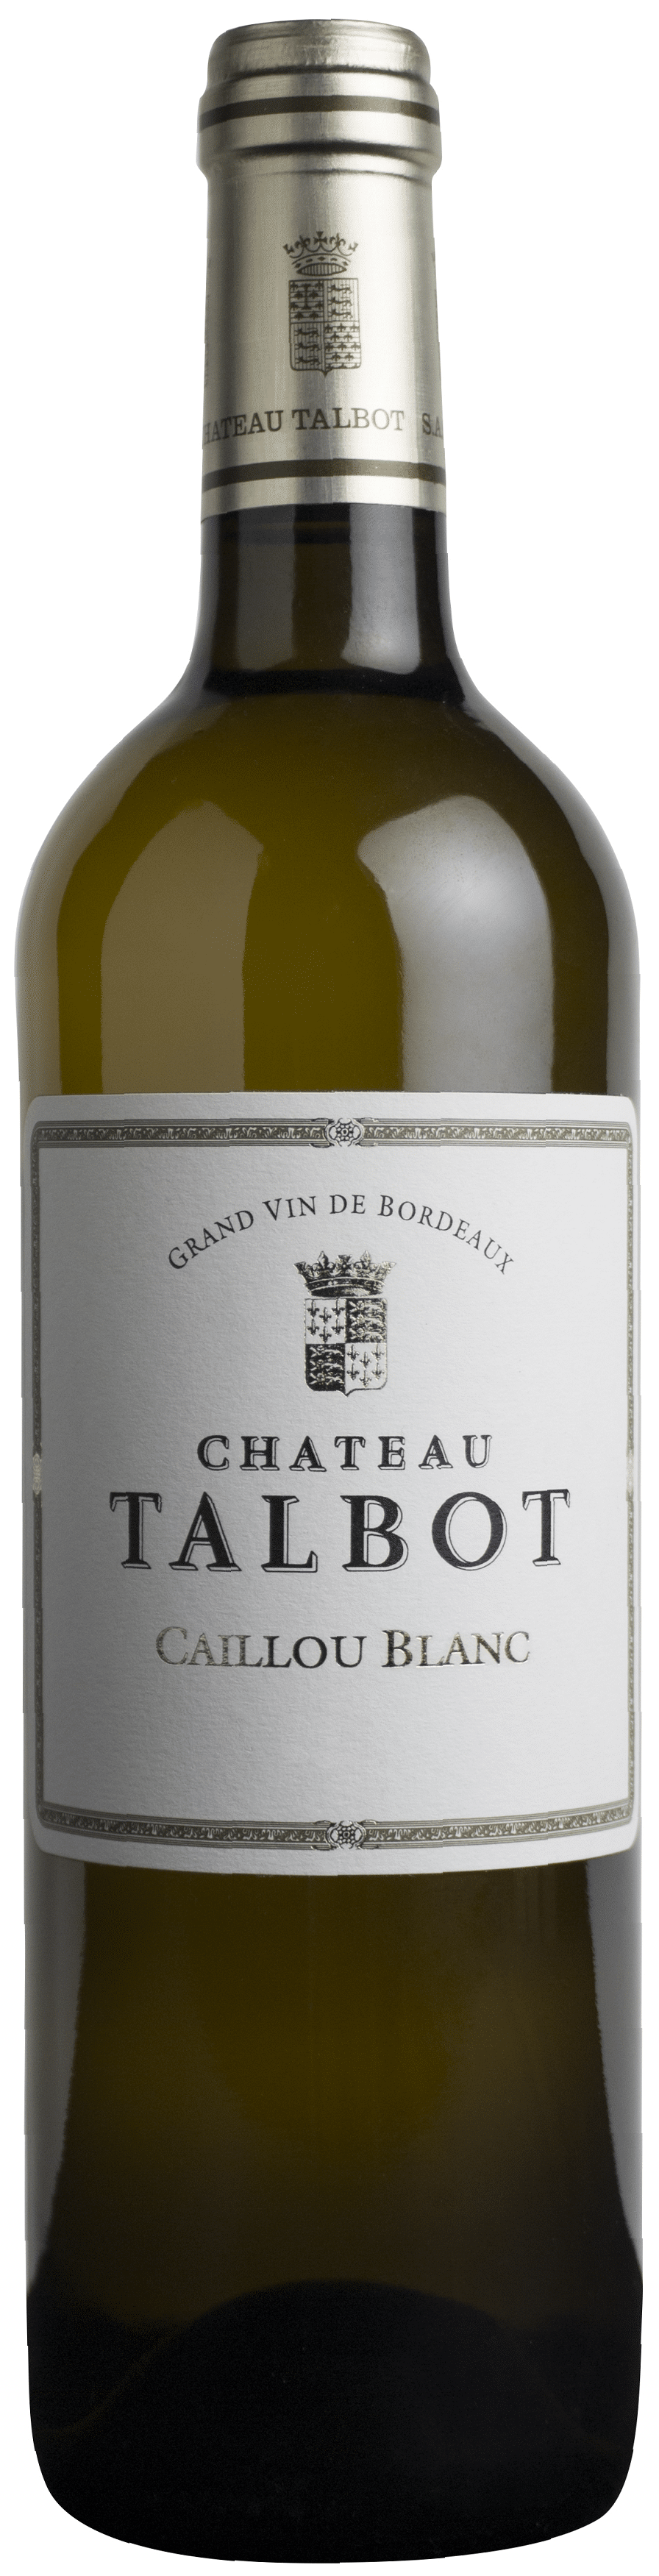 Chateau Talbot, Caillou Blanc, 2014